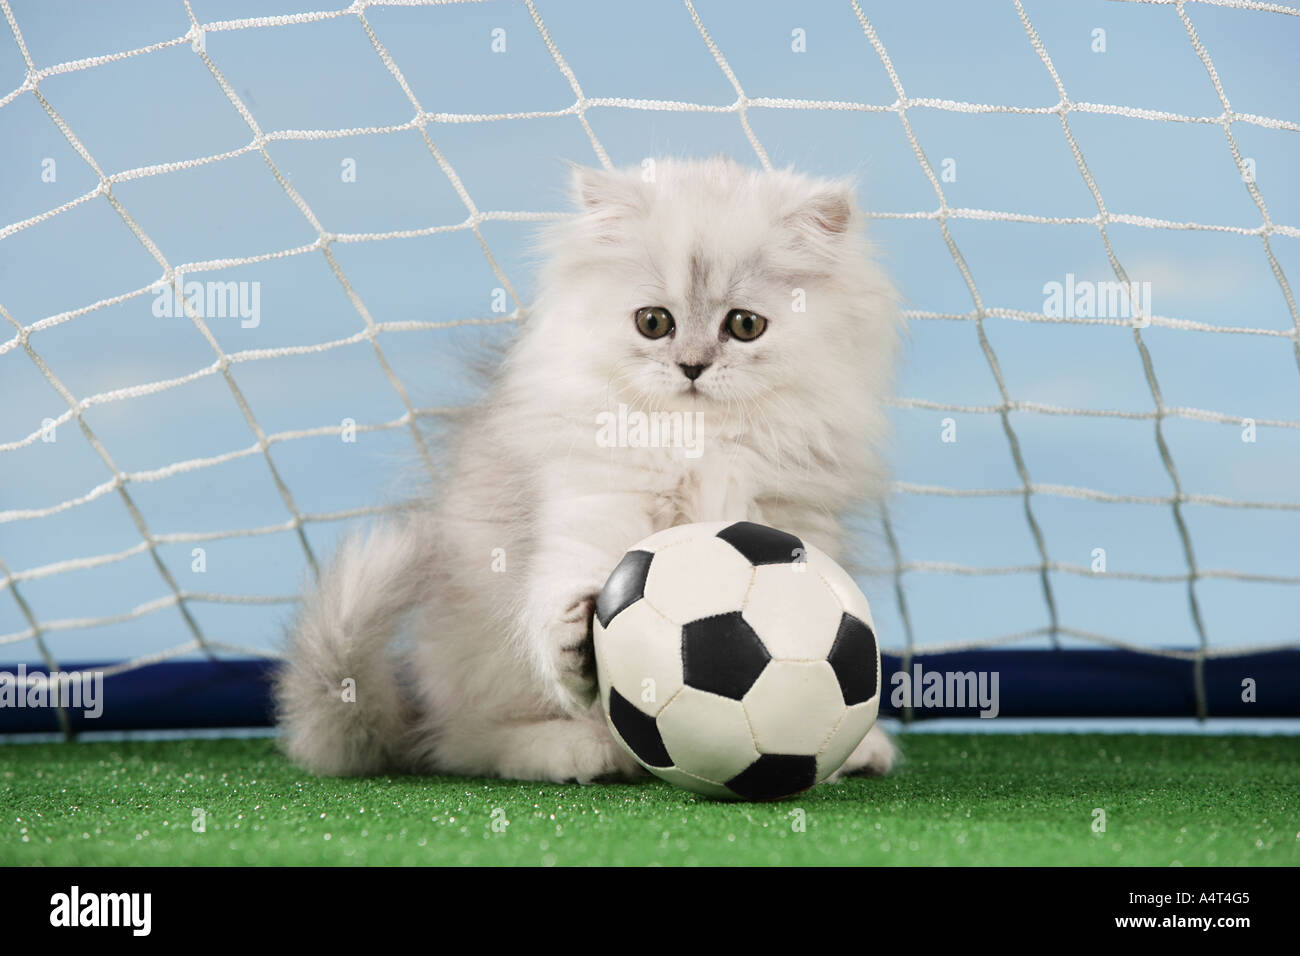 cat soccer ball